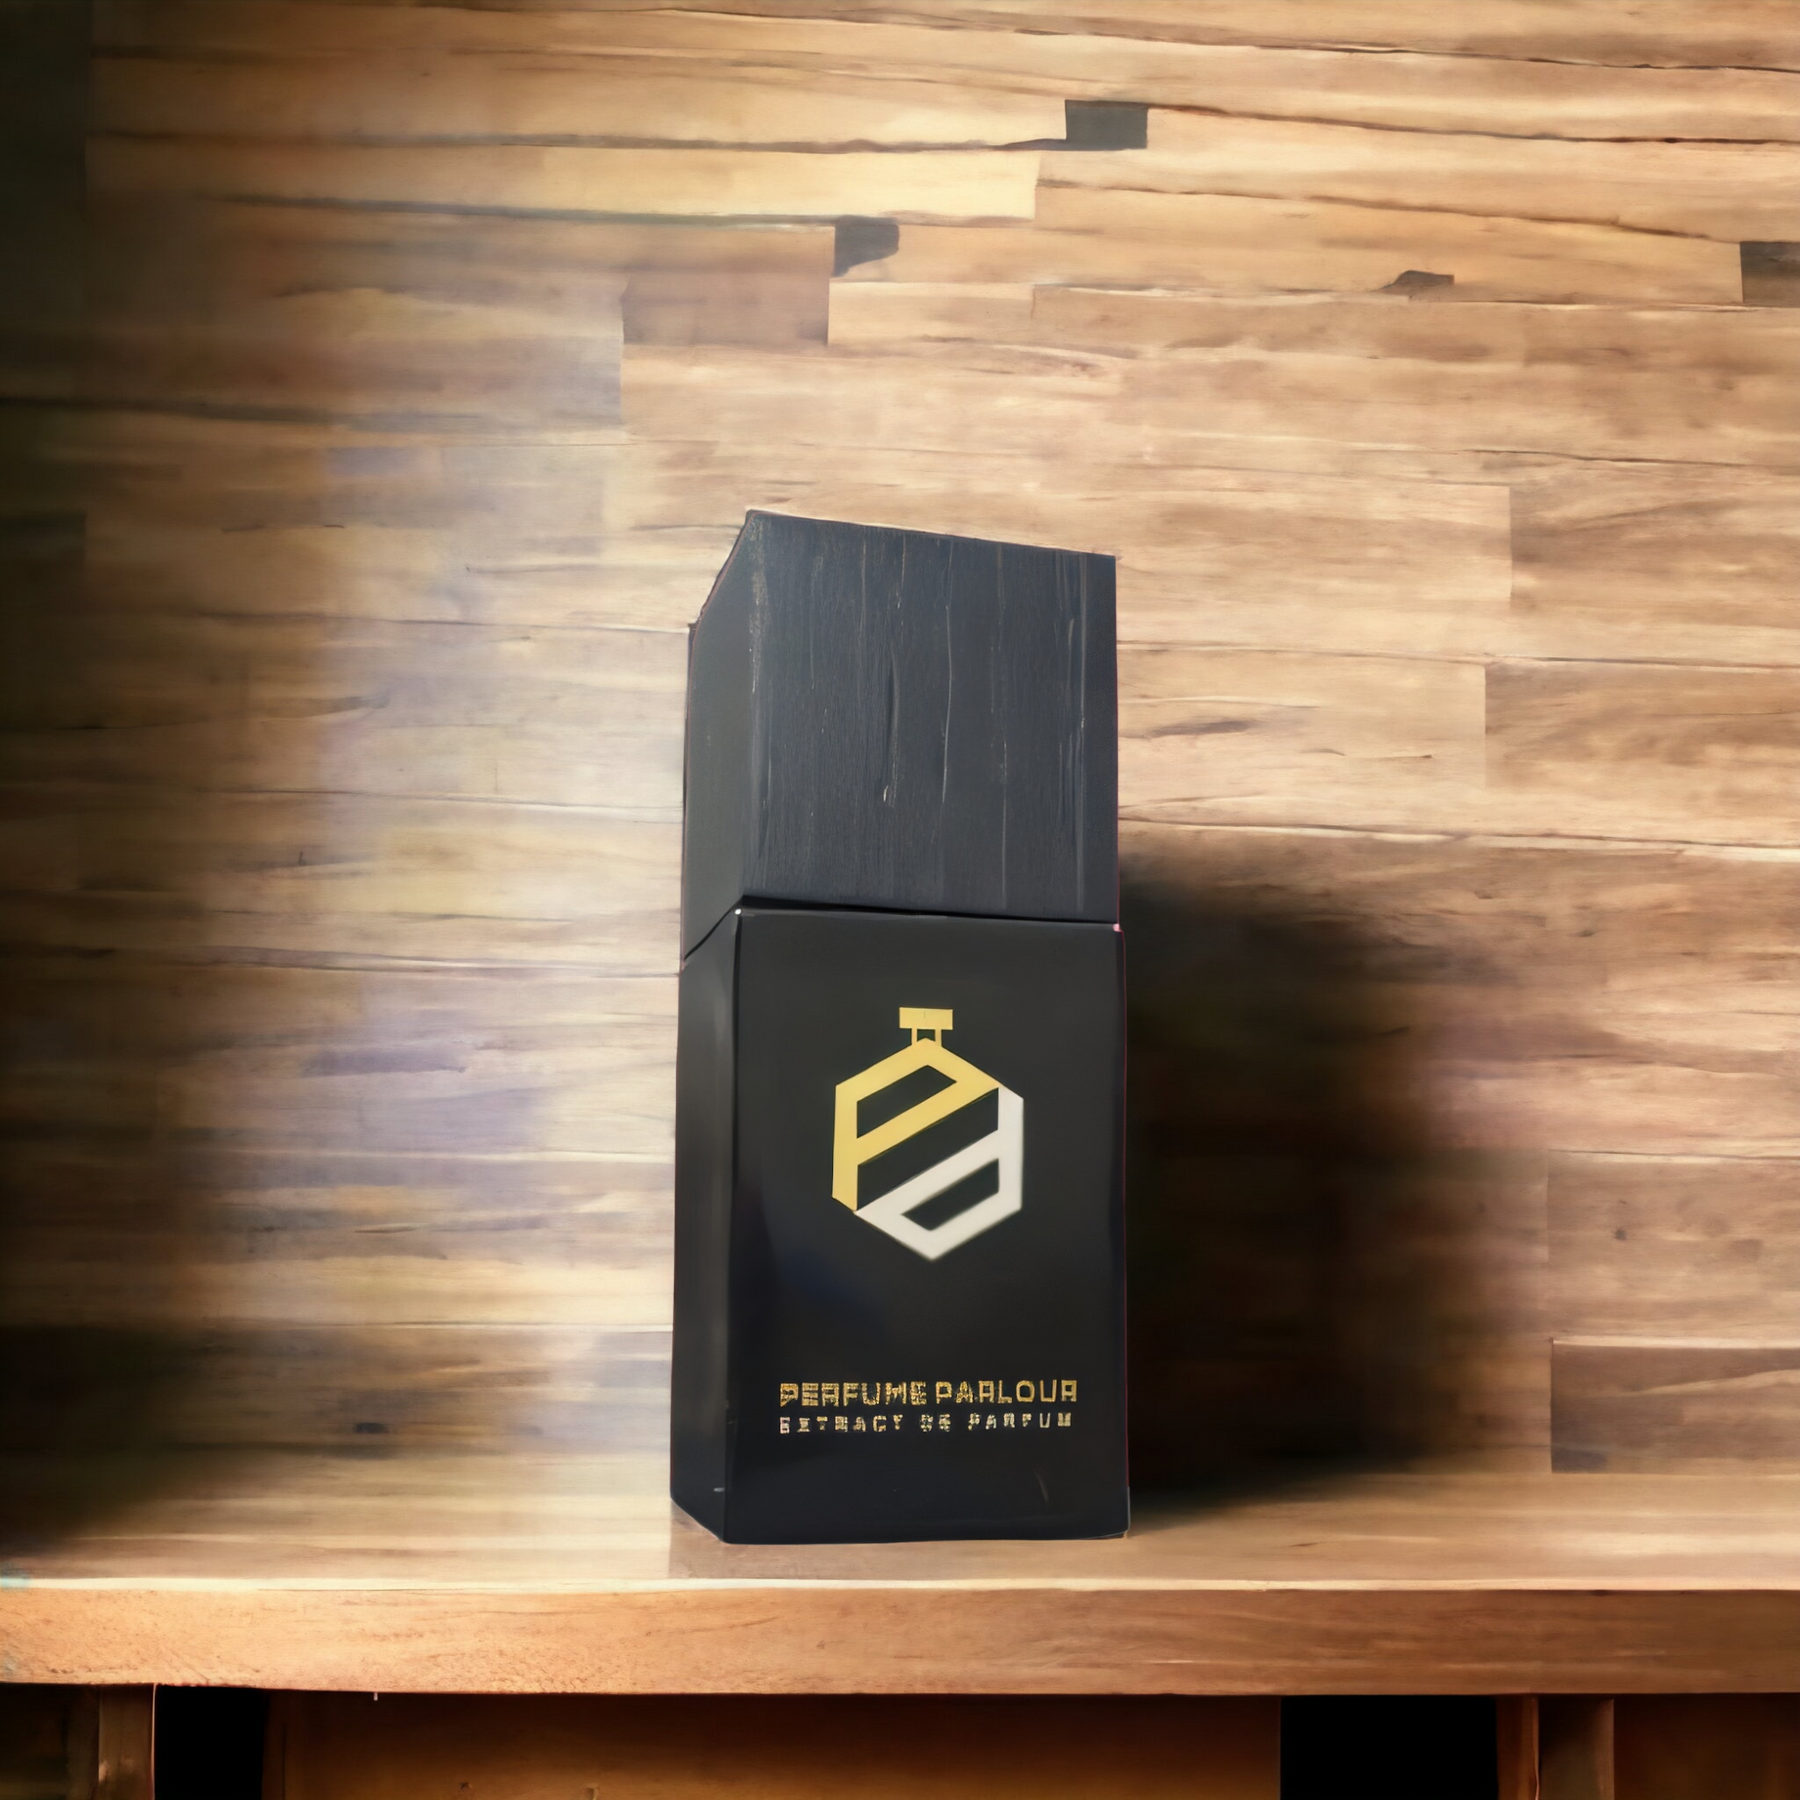 Louis Vuitton ombré nomade clone perfume parlours card wander ( review) 